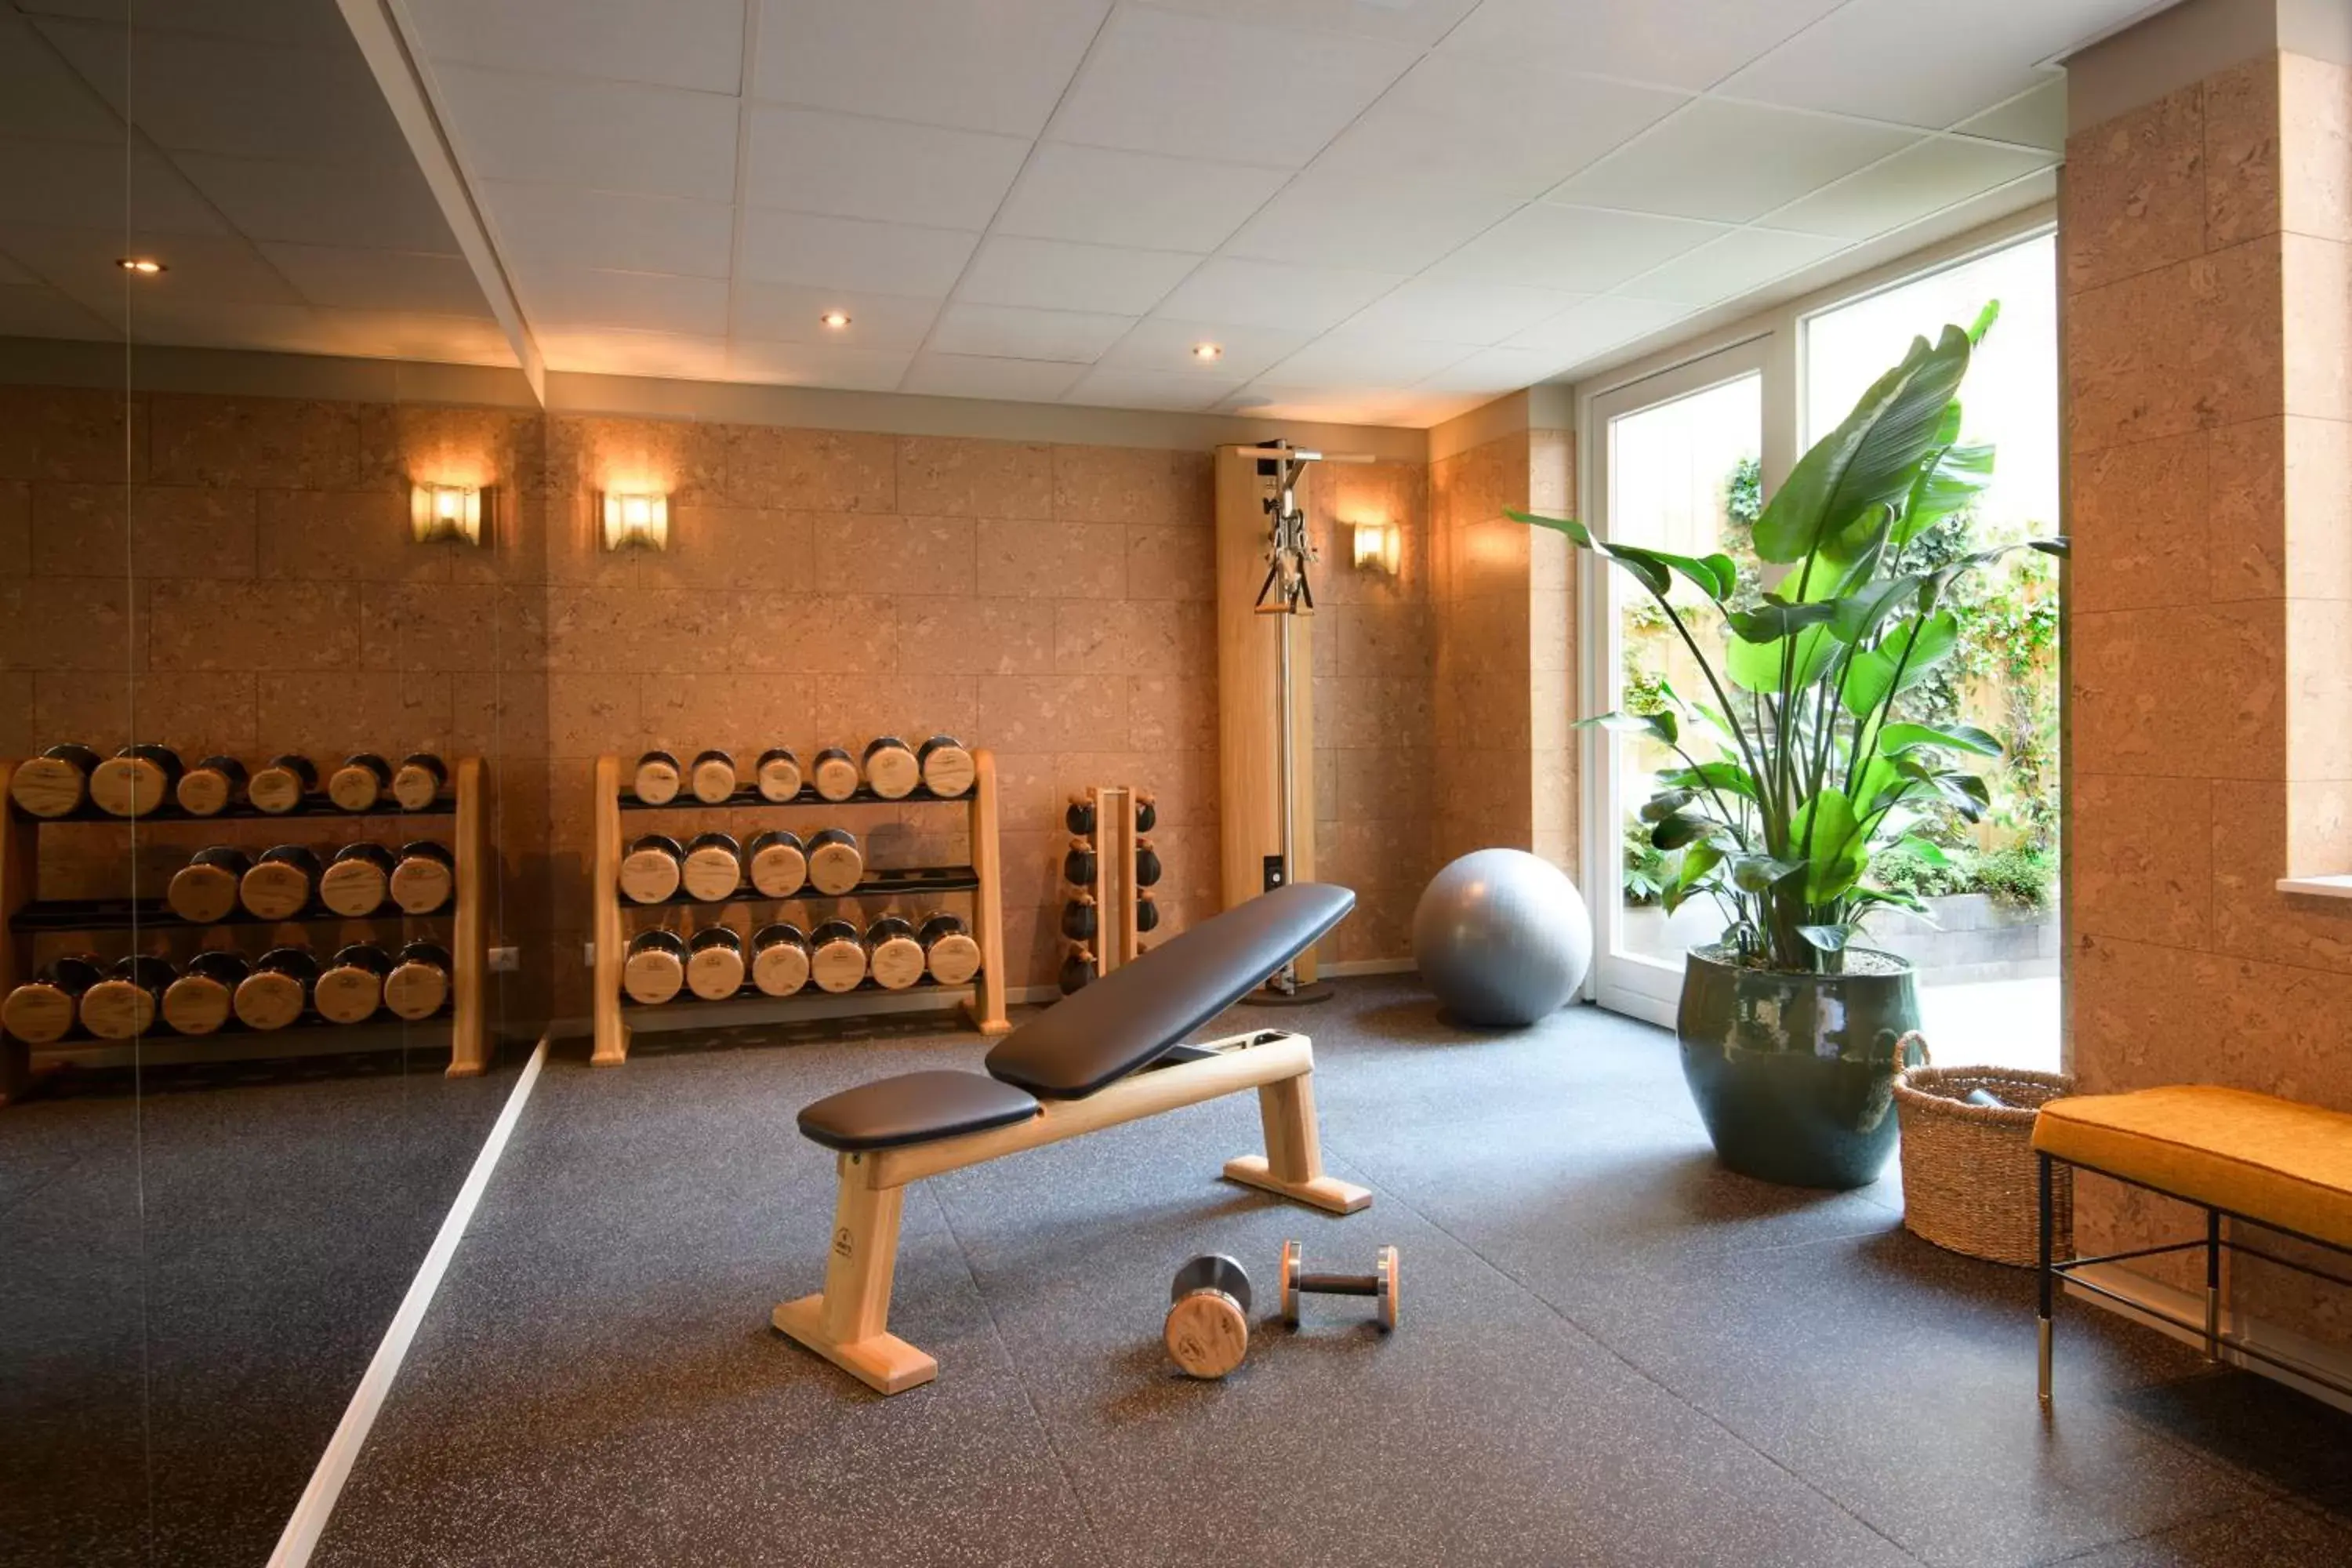 Fitness centre/facilities, Fitness Center/Facilities in Jan Luyken Amsterdam